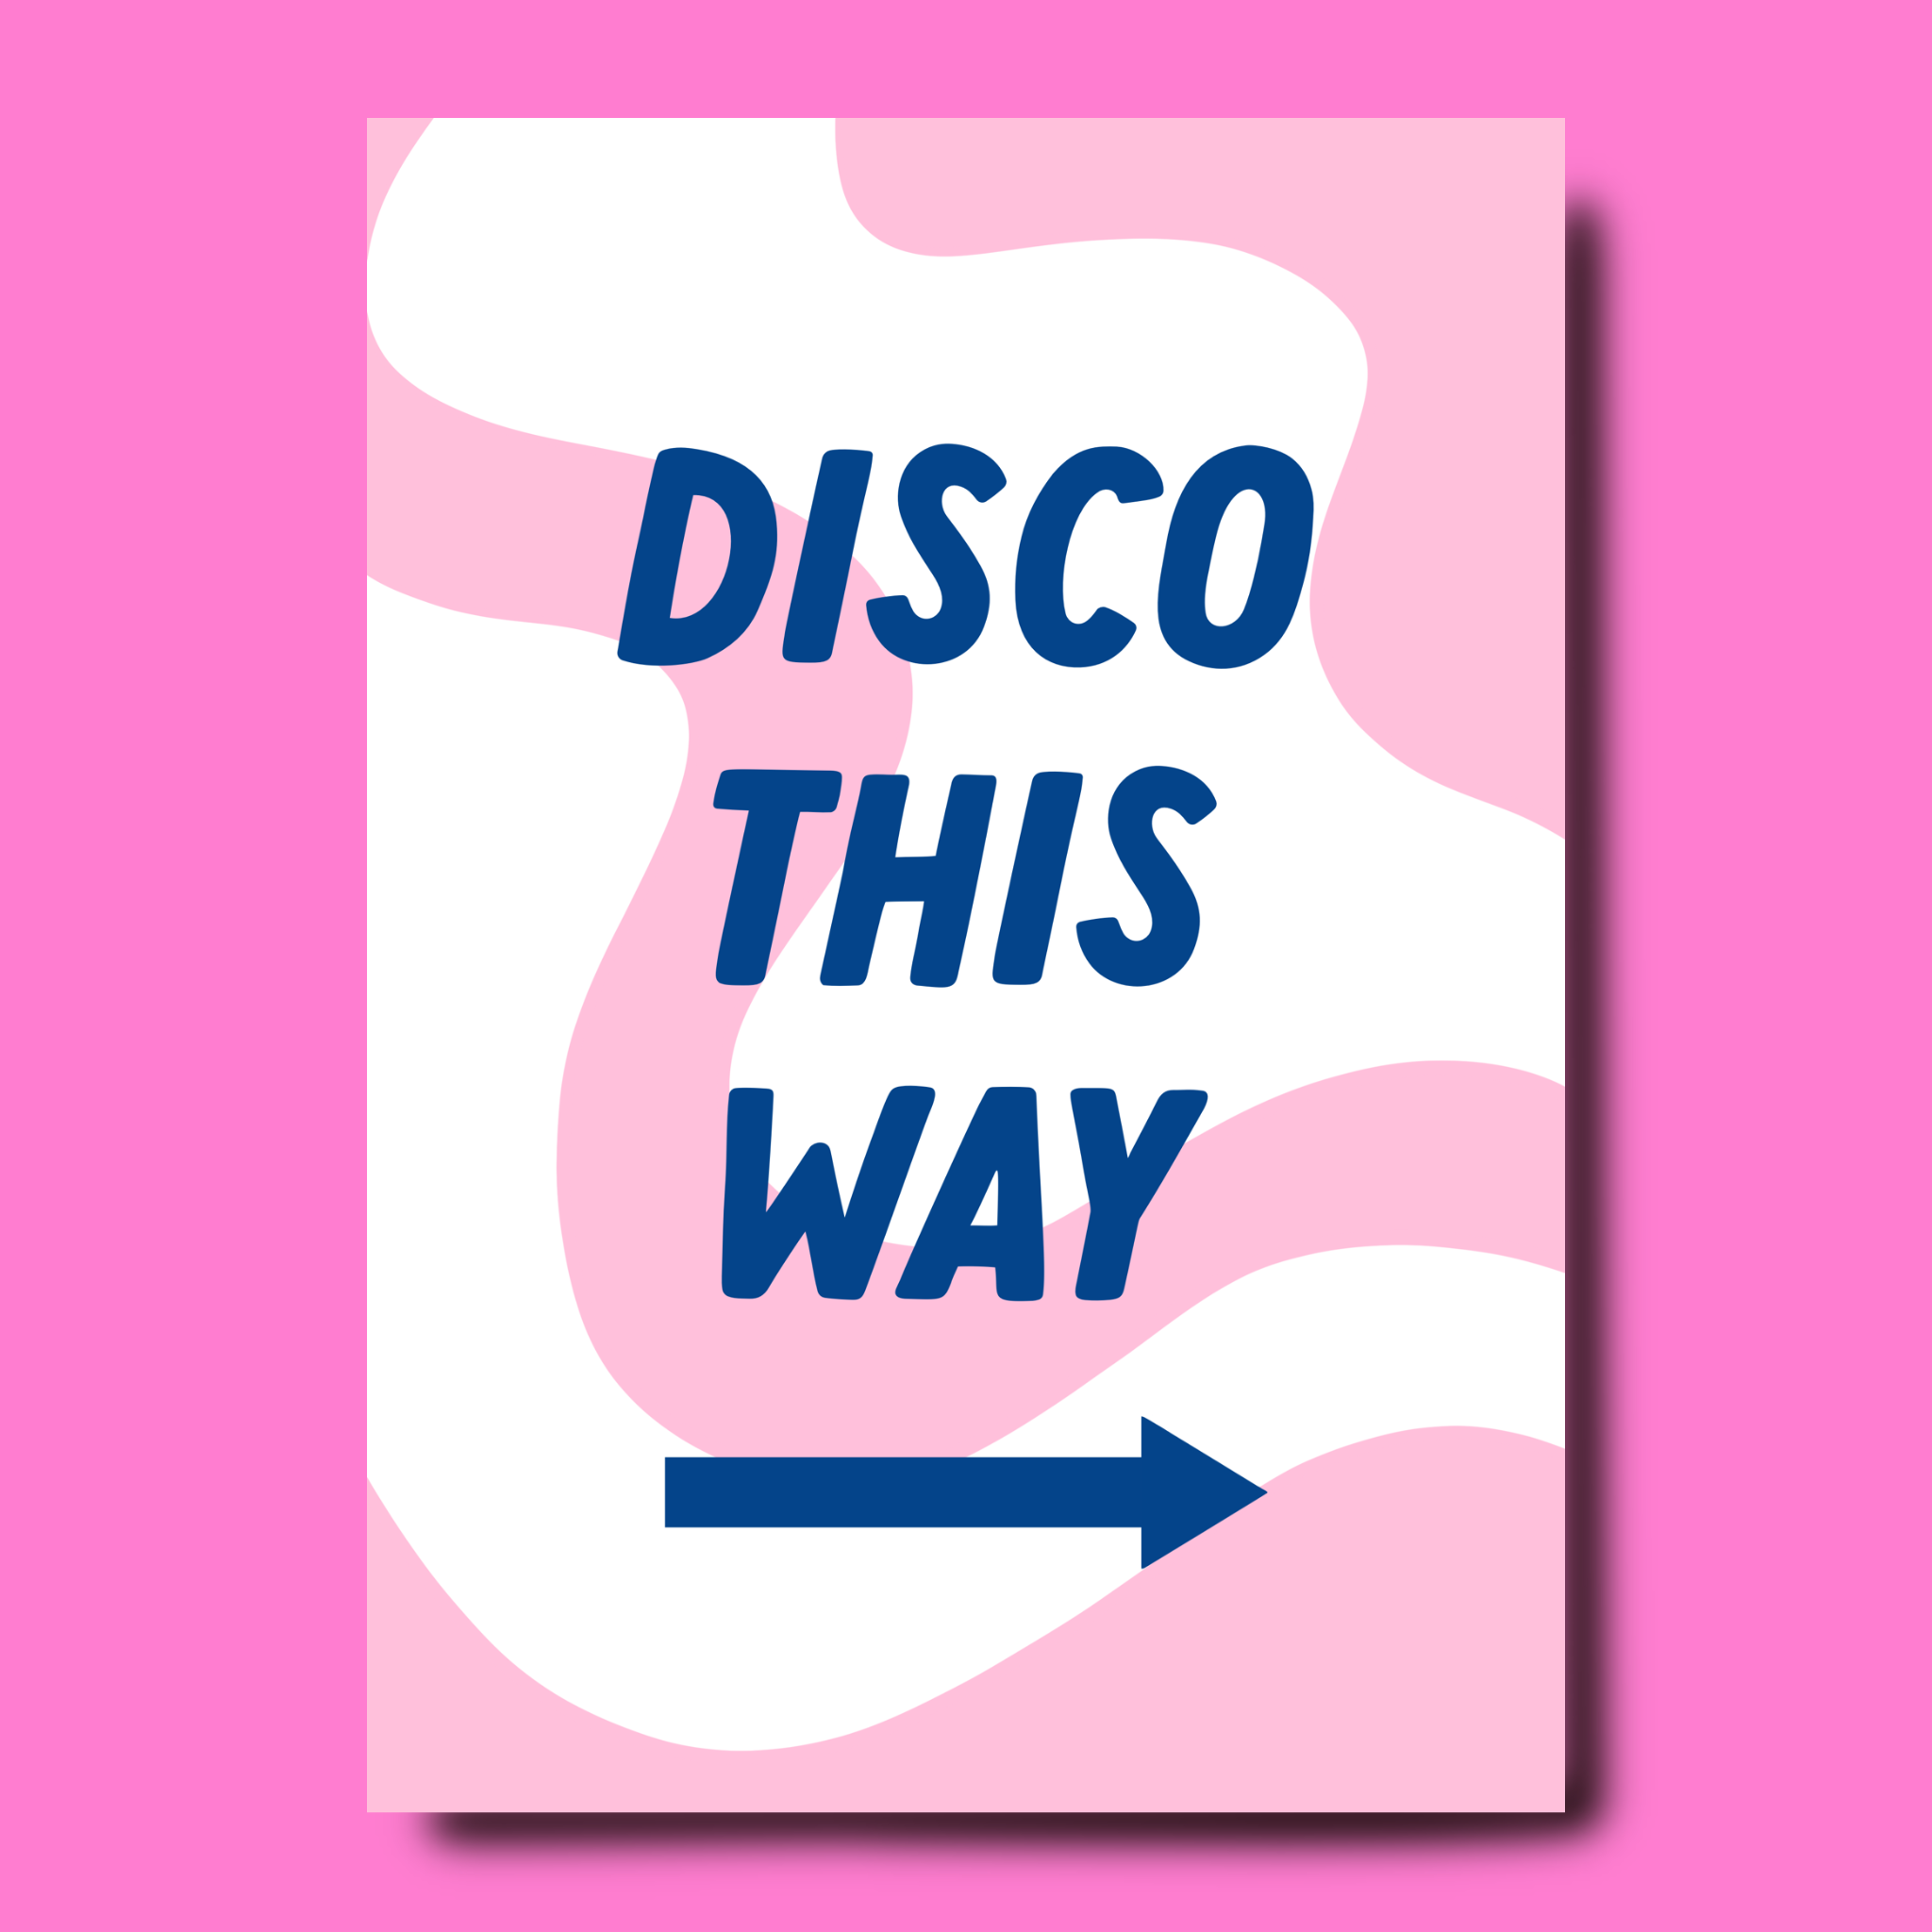 Disco this way – Blue print